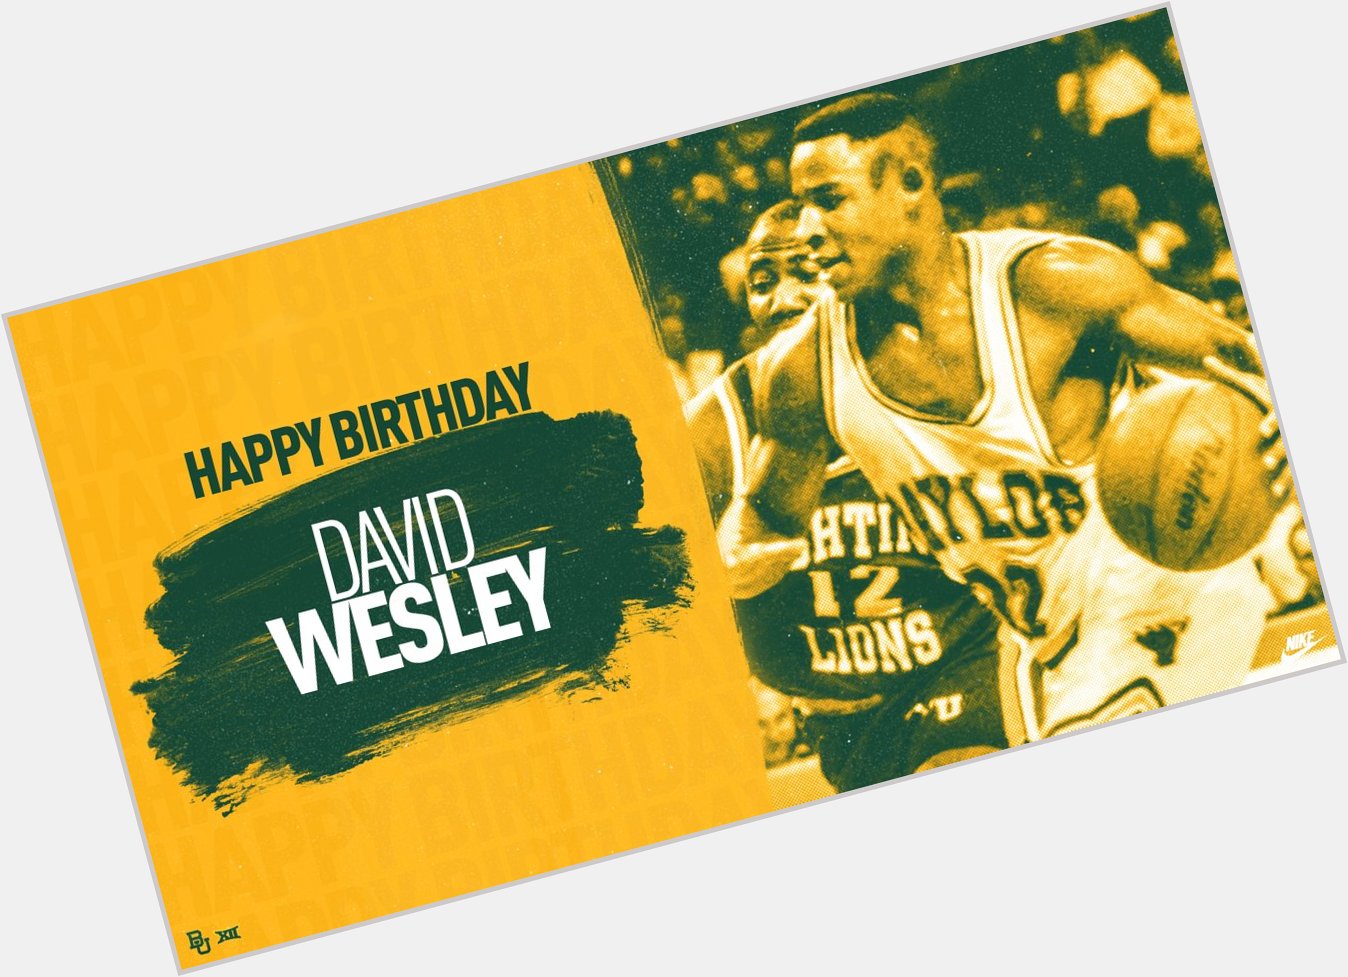  Wishing a Happy Birthday to David Wesley! 